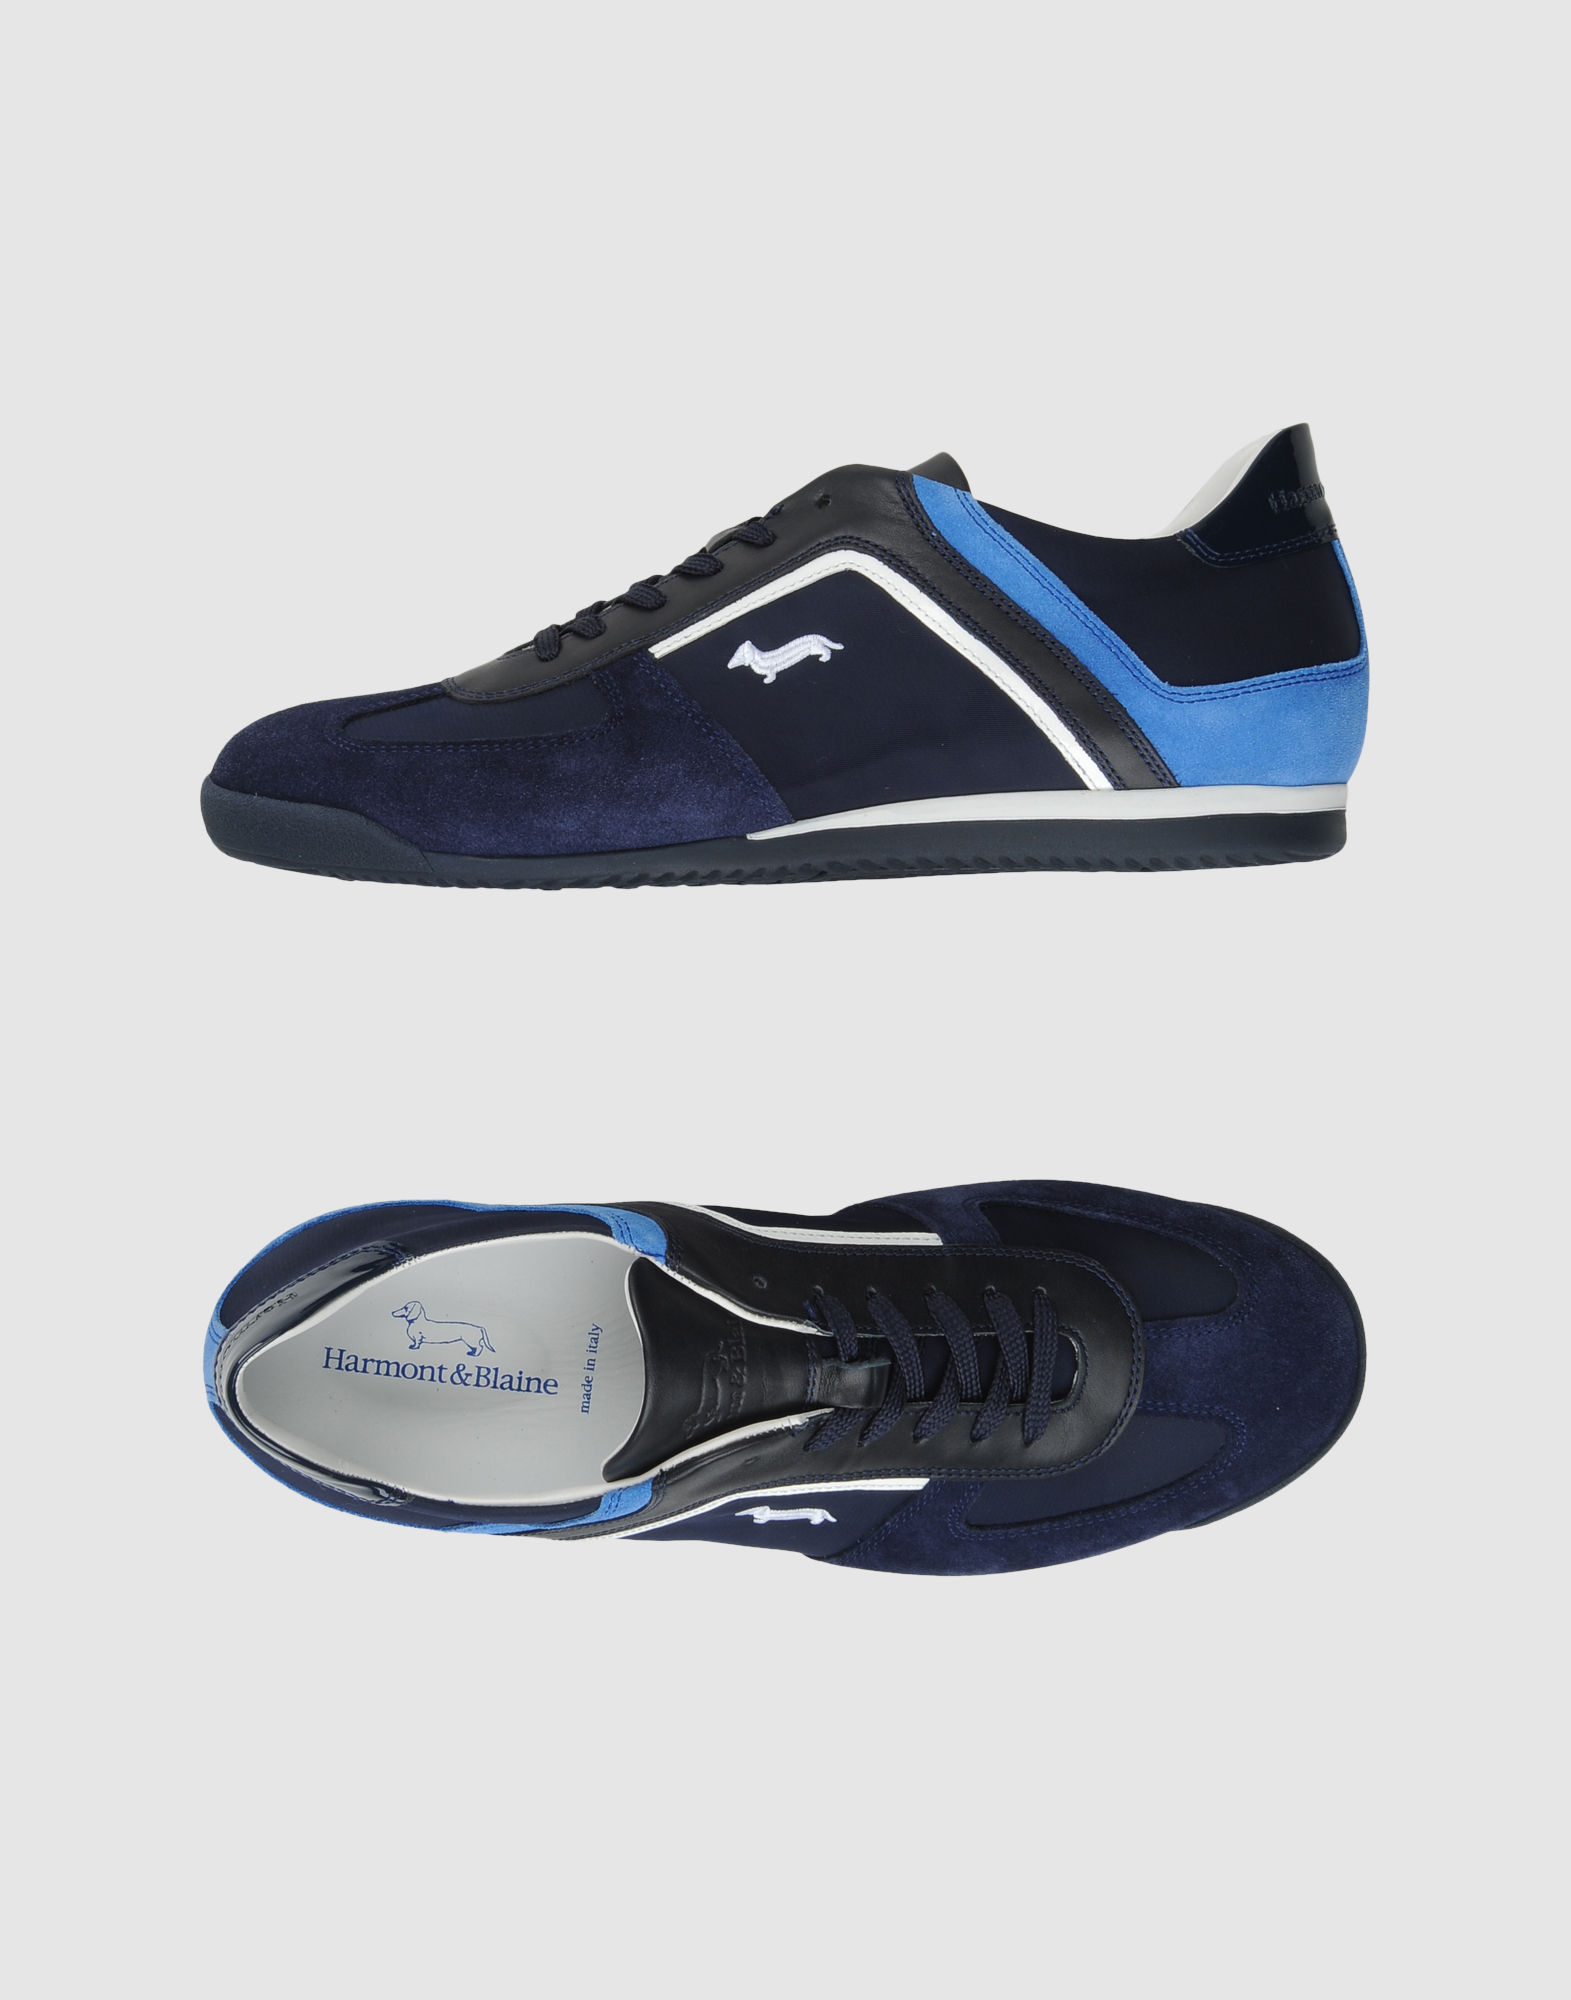 Harmont & Blaine Sneakers in Blue for Men - Lyst